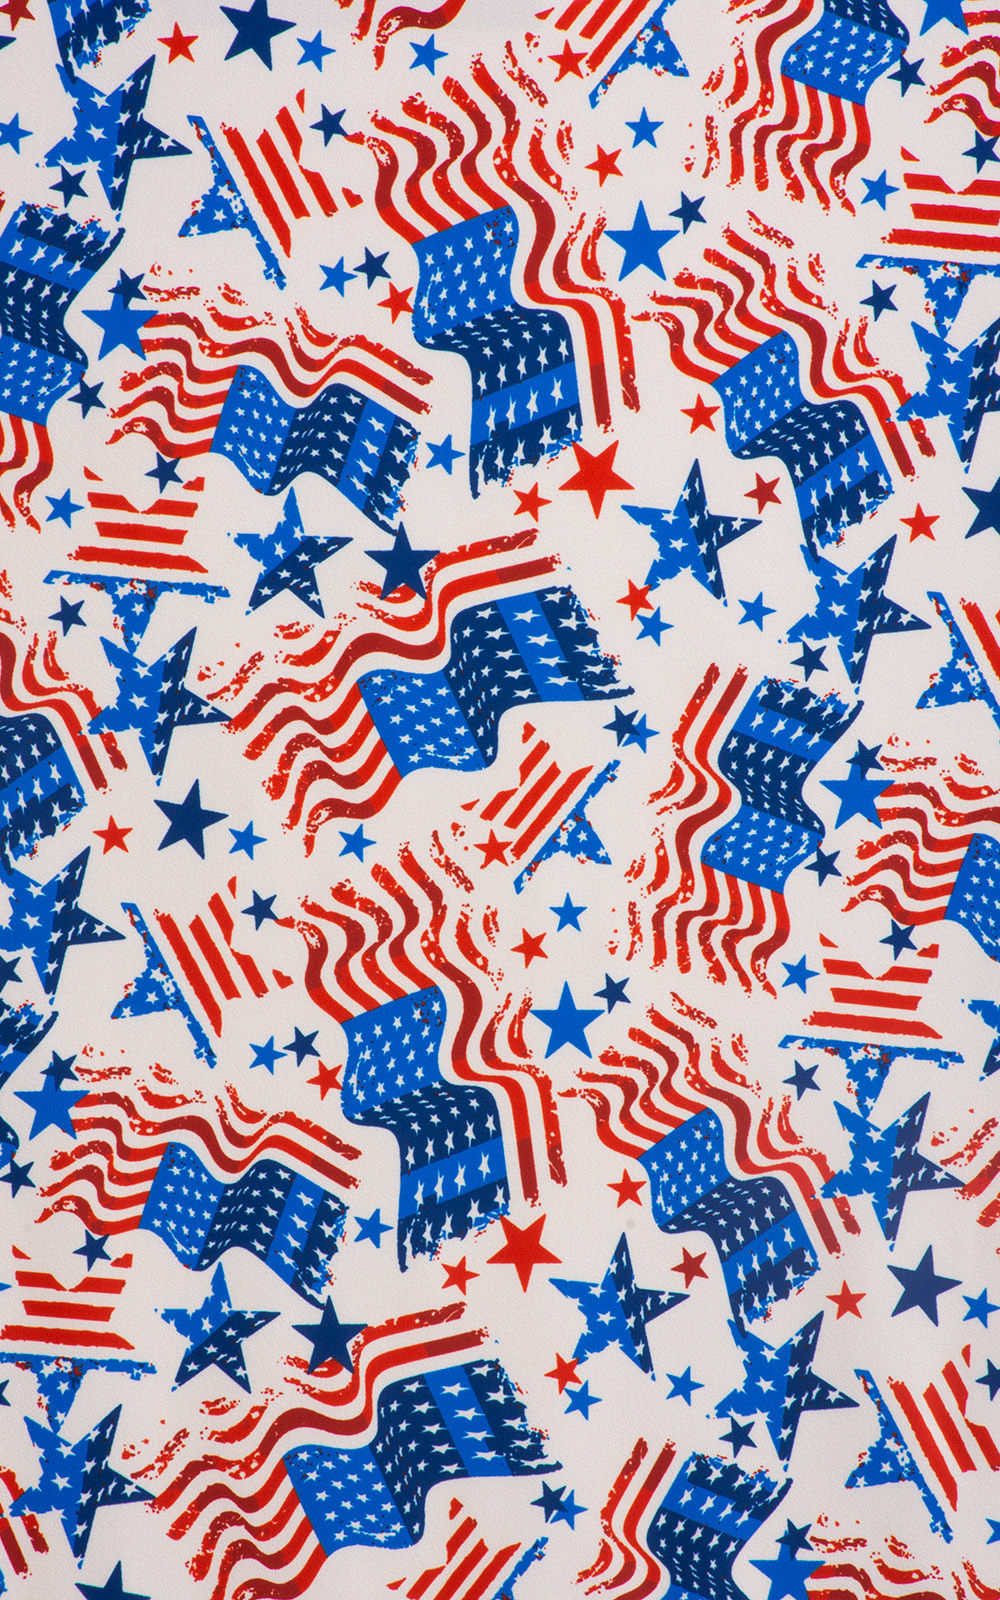 swimwear fabric in USA flags print by skinzwear